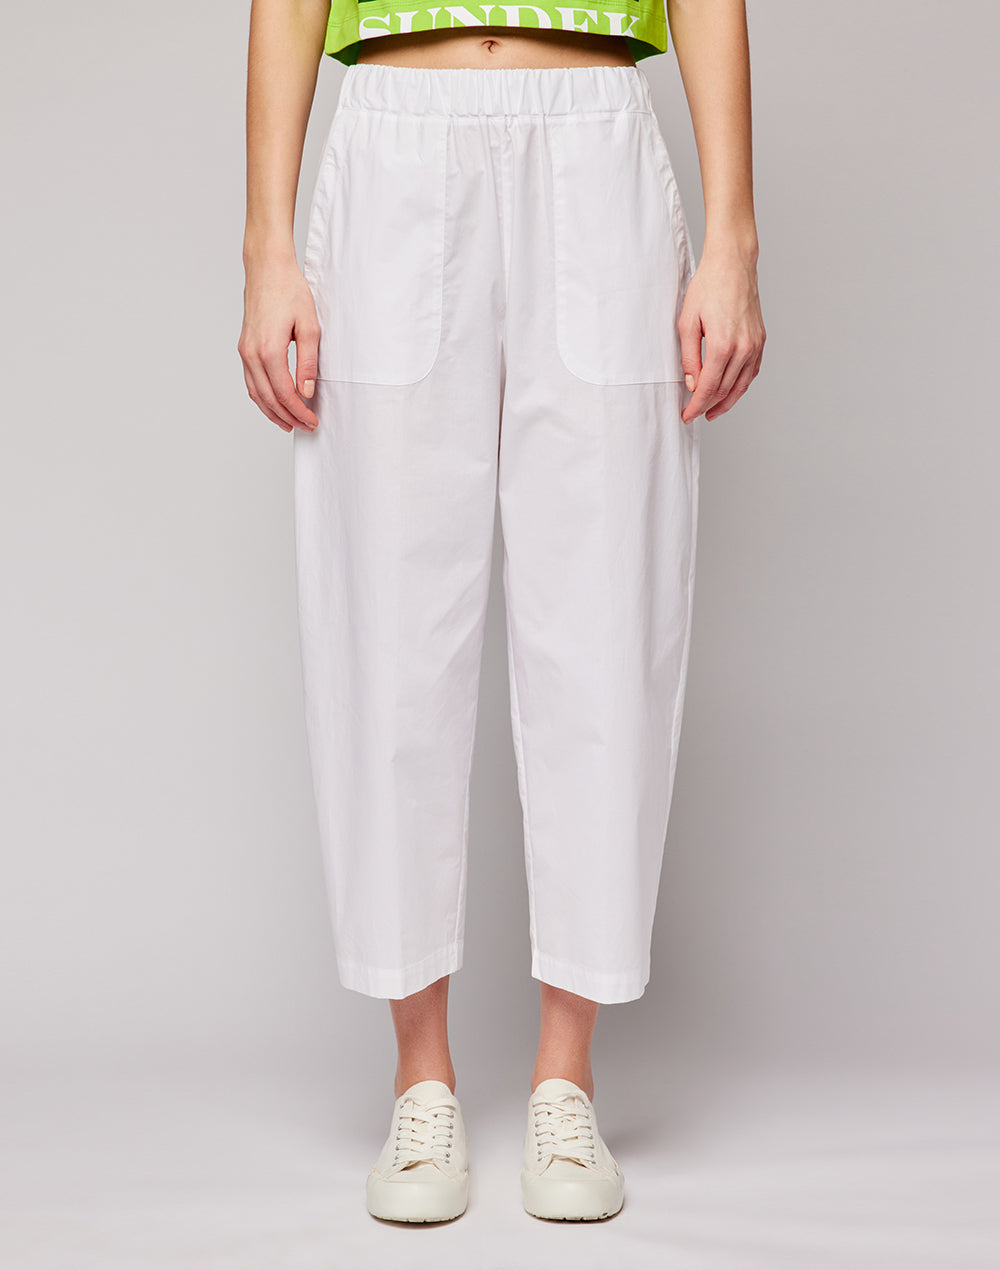 Shop Drawstring side cotton poplin elastic waist pants